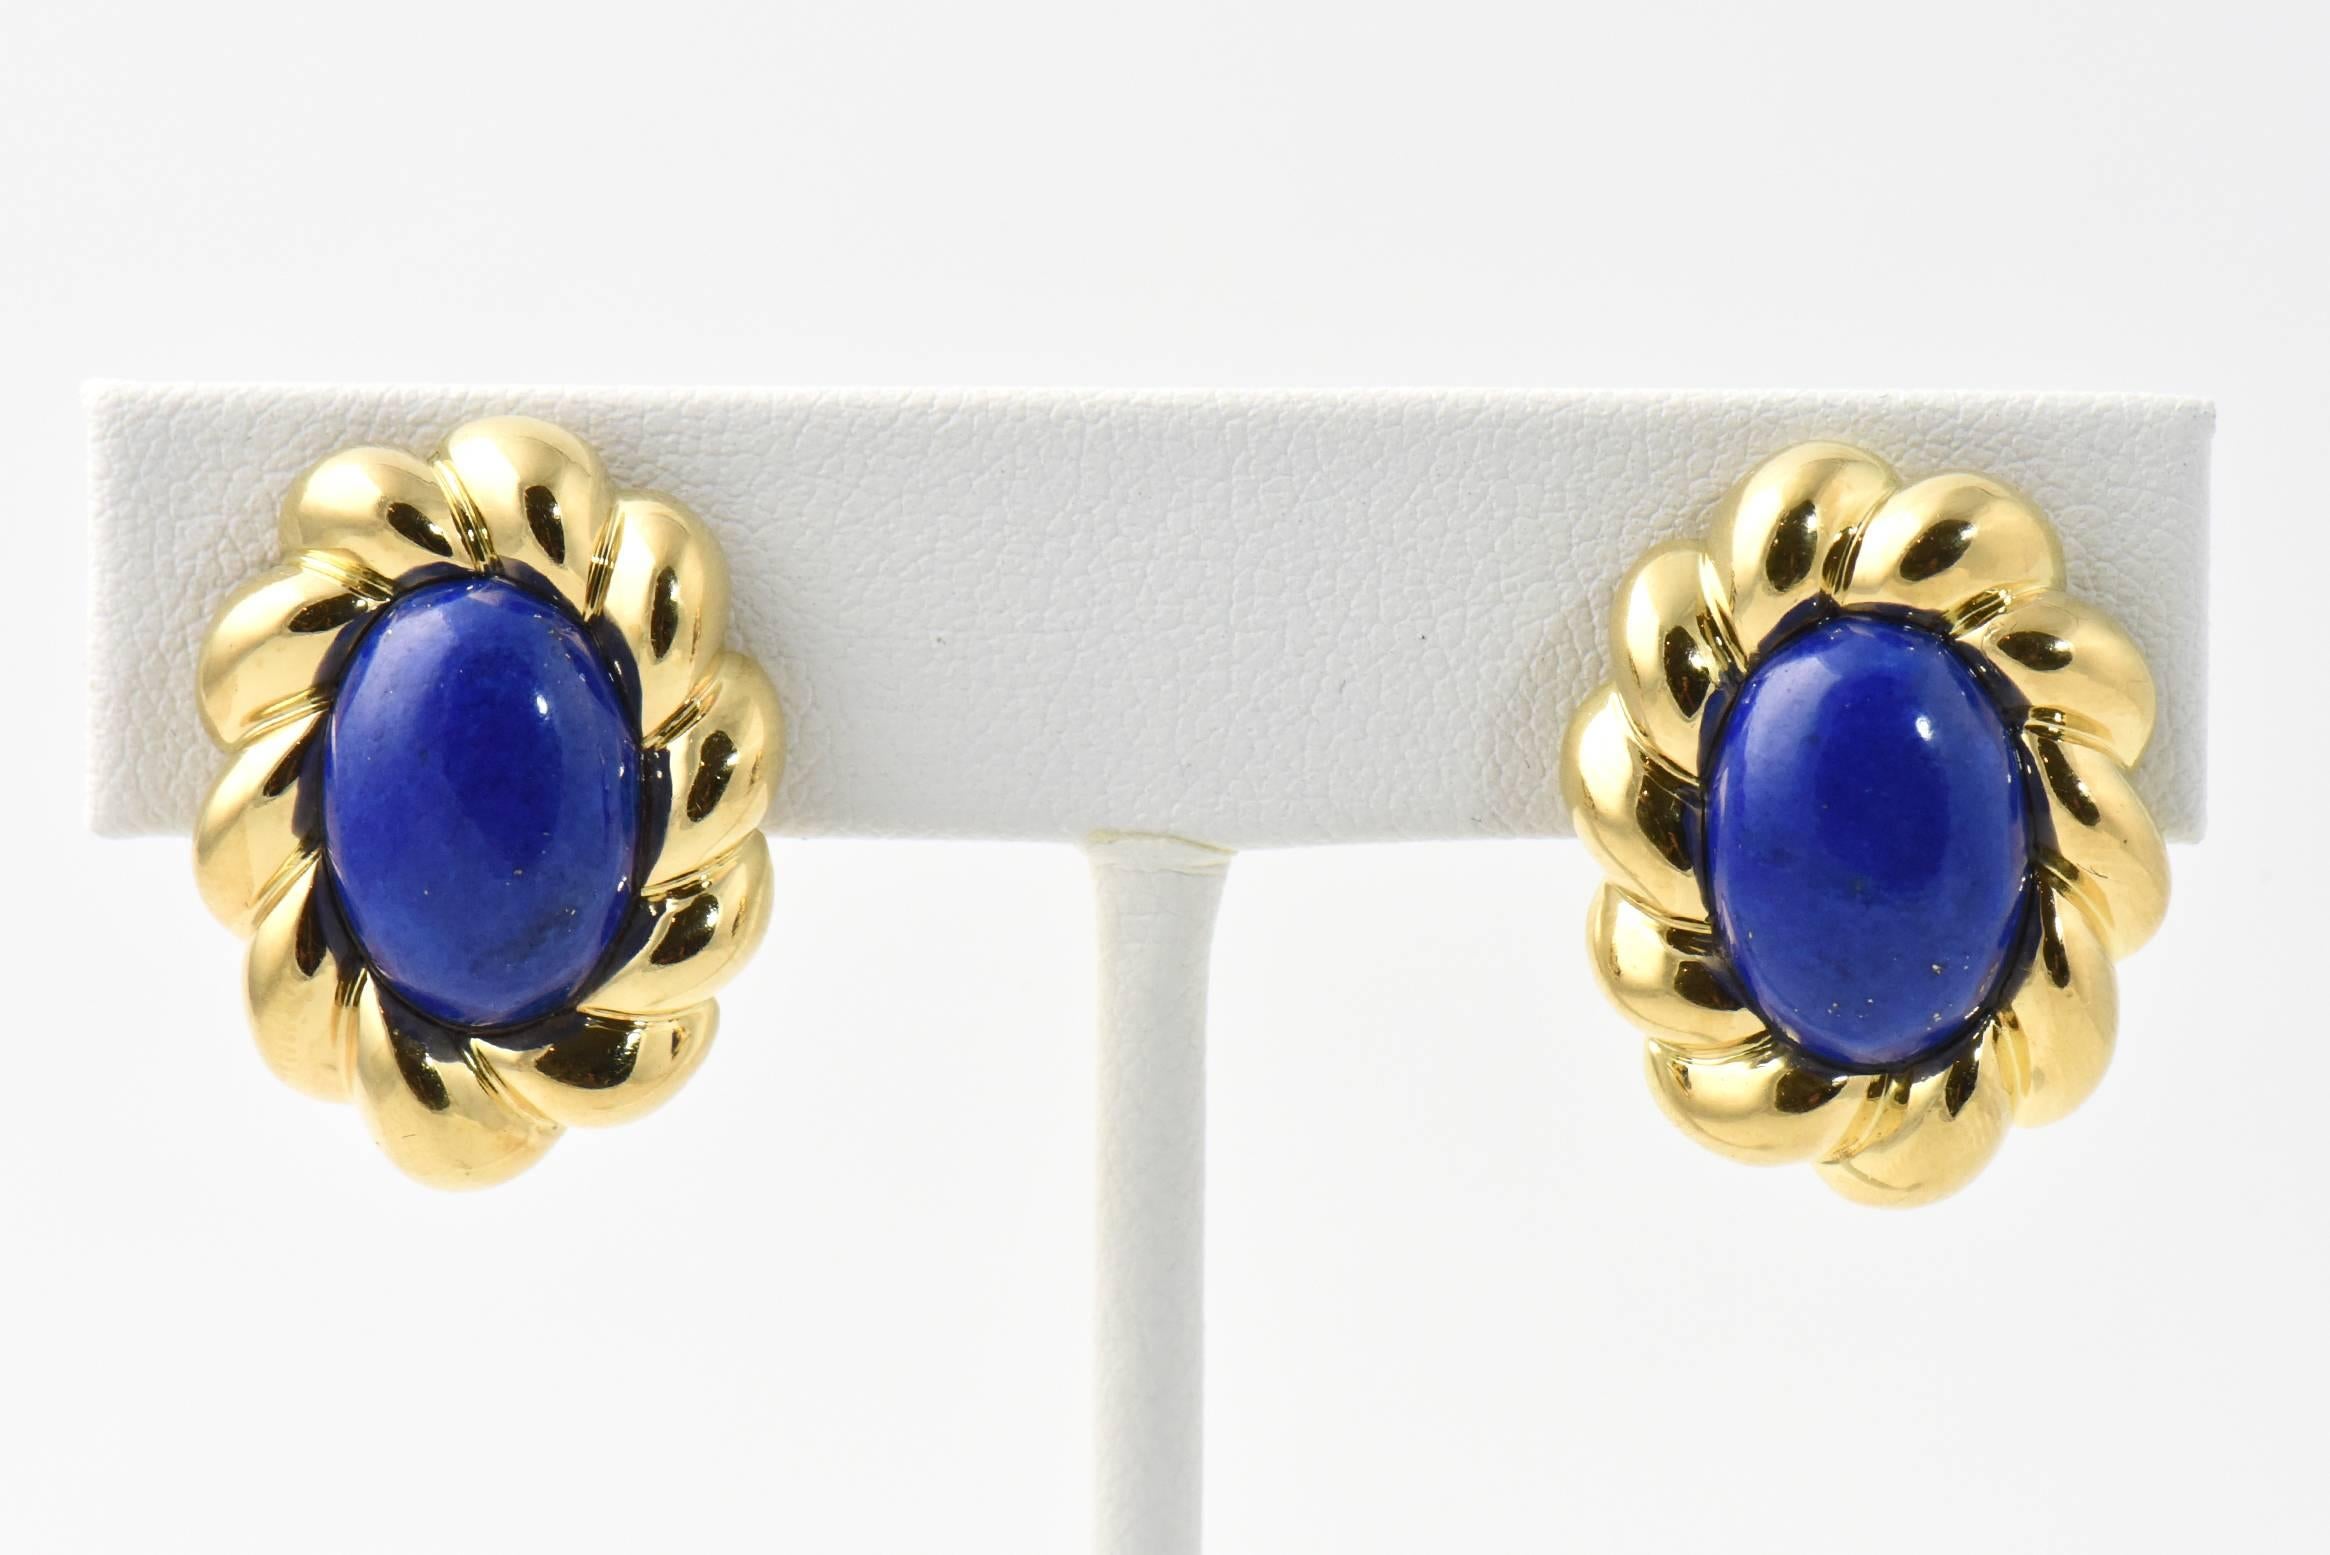 Oval cabochon lapis lazuli earrings framed in sculpted 18K gold. Clip backs. Some wear.
